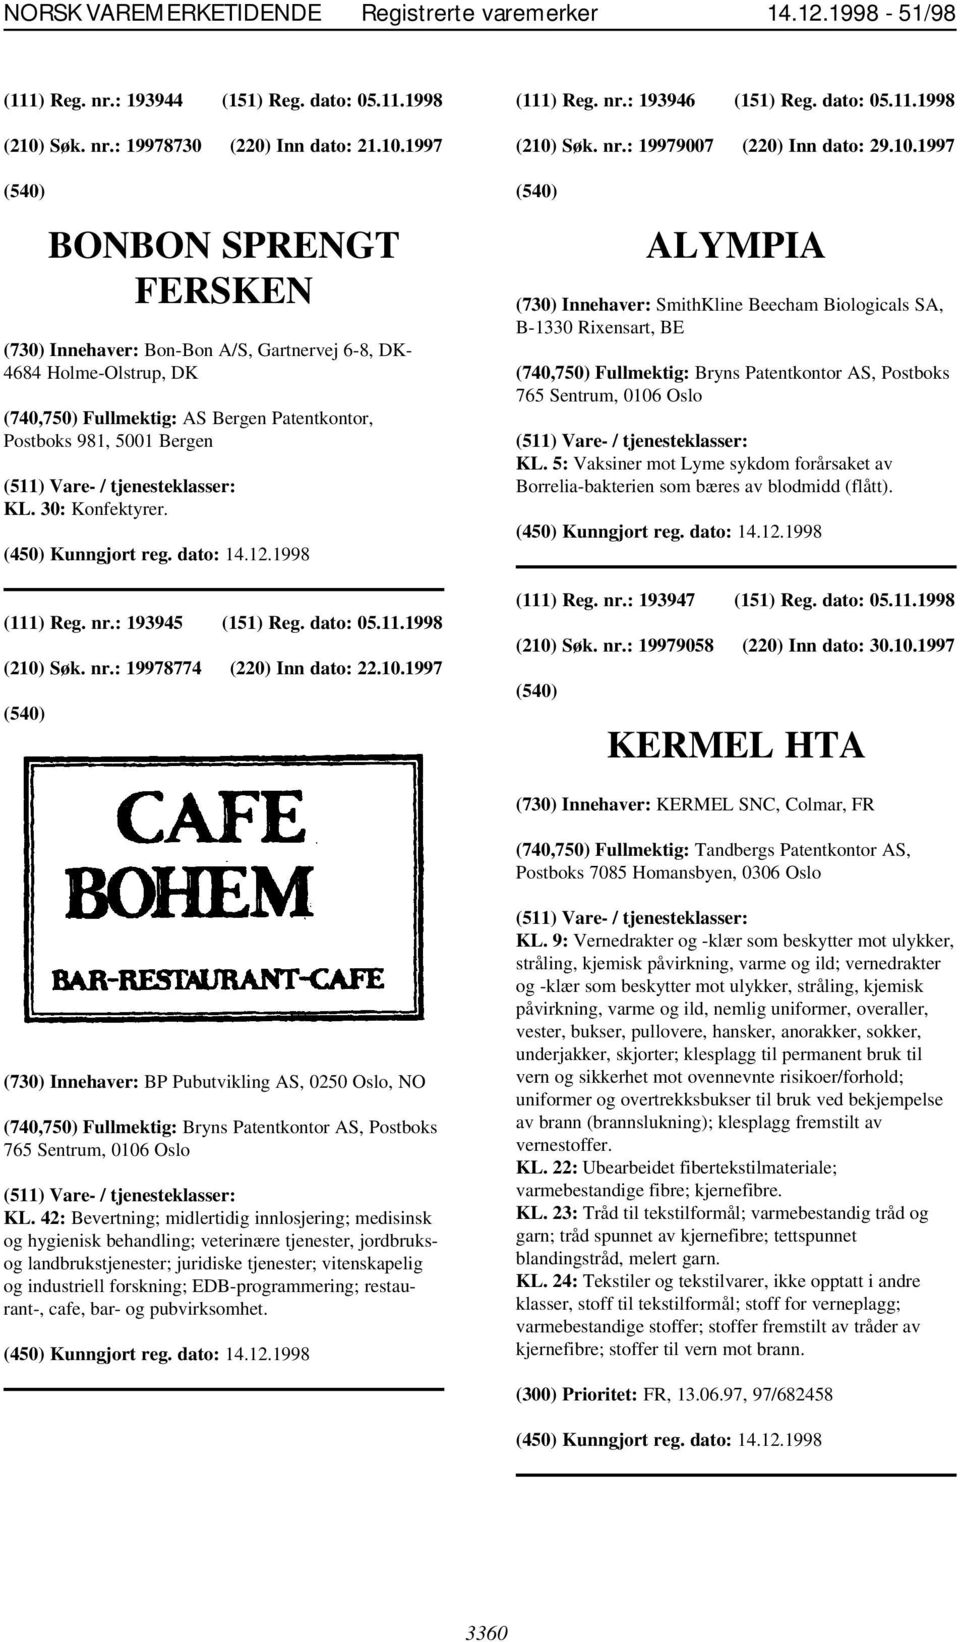 1997 BONBON SPRENGT FERSKEN (730) Innehaver: Bon-Bon A/S, Gartnervej 6-8, DK- 4684 Holme-Olstrup, DK (740,750) Fullmektig: AS Bergen Patentkontor, Postboks 981, 5001 Bergen KL. 30: Konfektyrer.